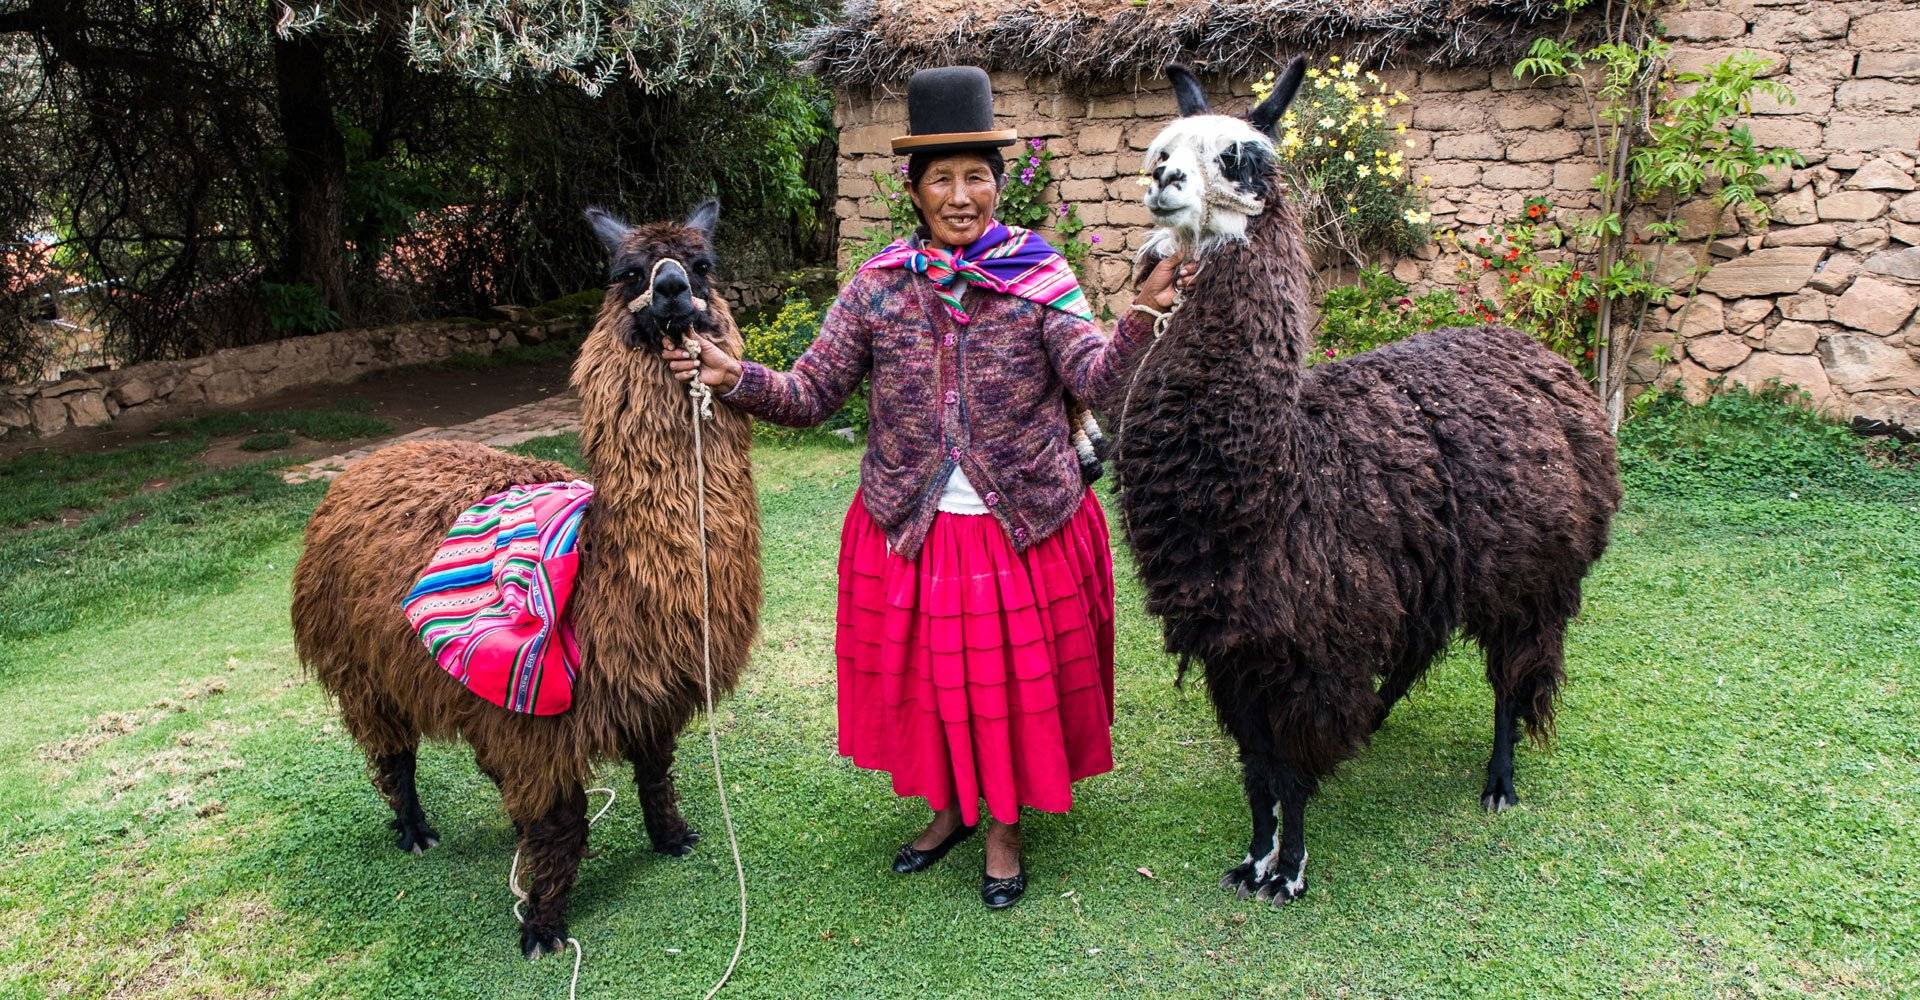 Bolivien, Posada del Inca, Indigena mit Alpakas, Latin America Tours